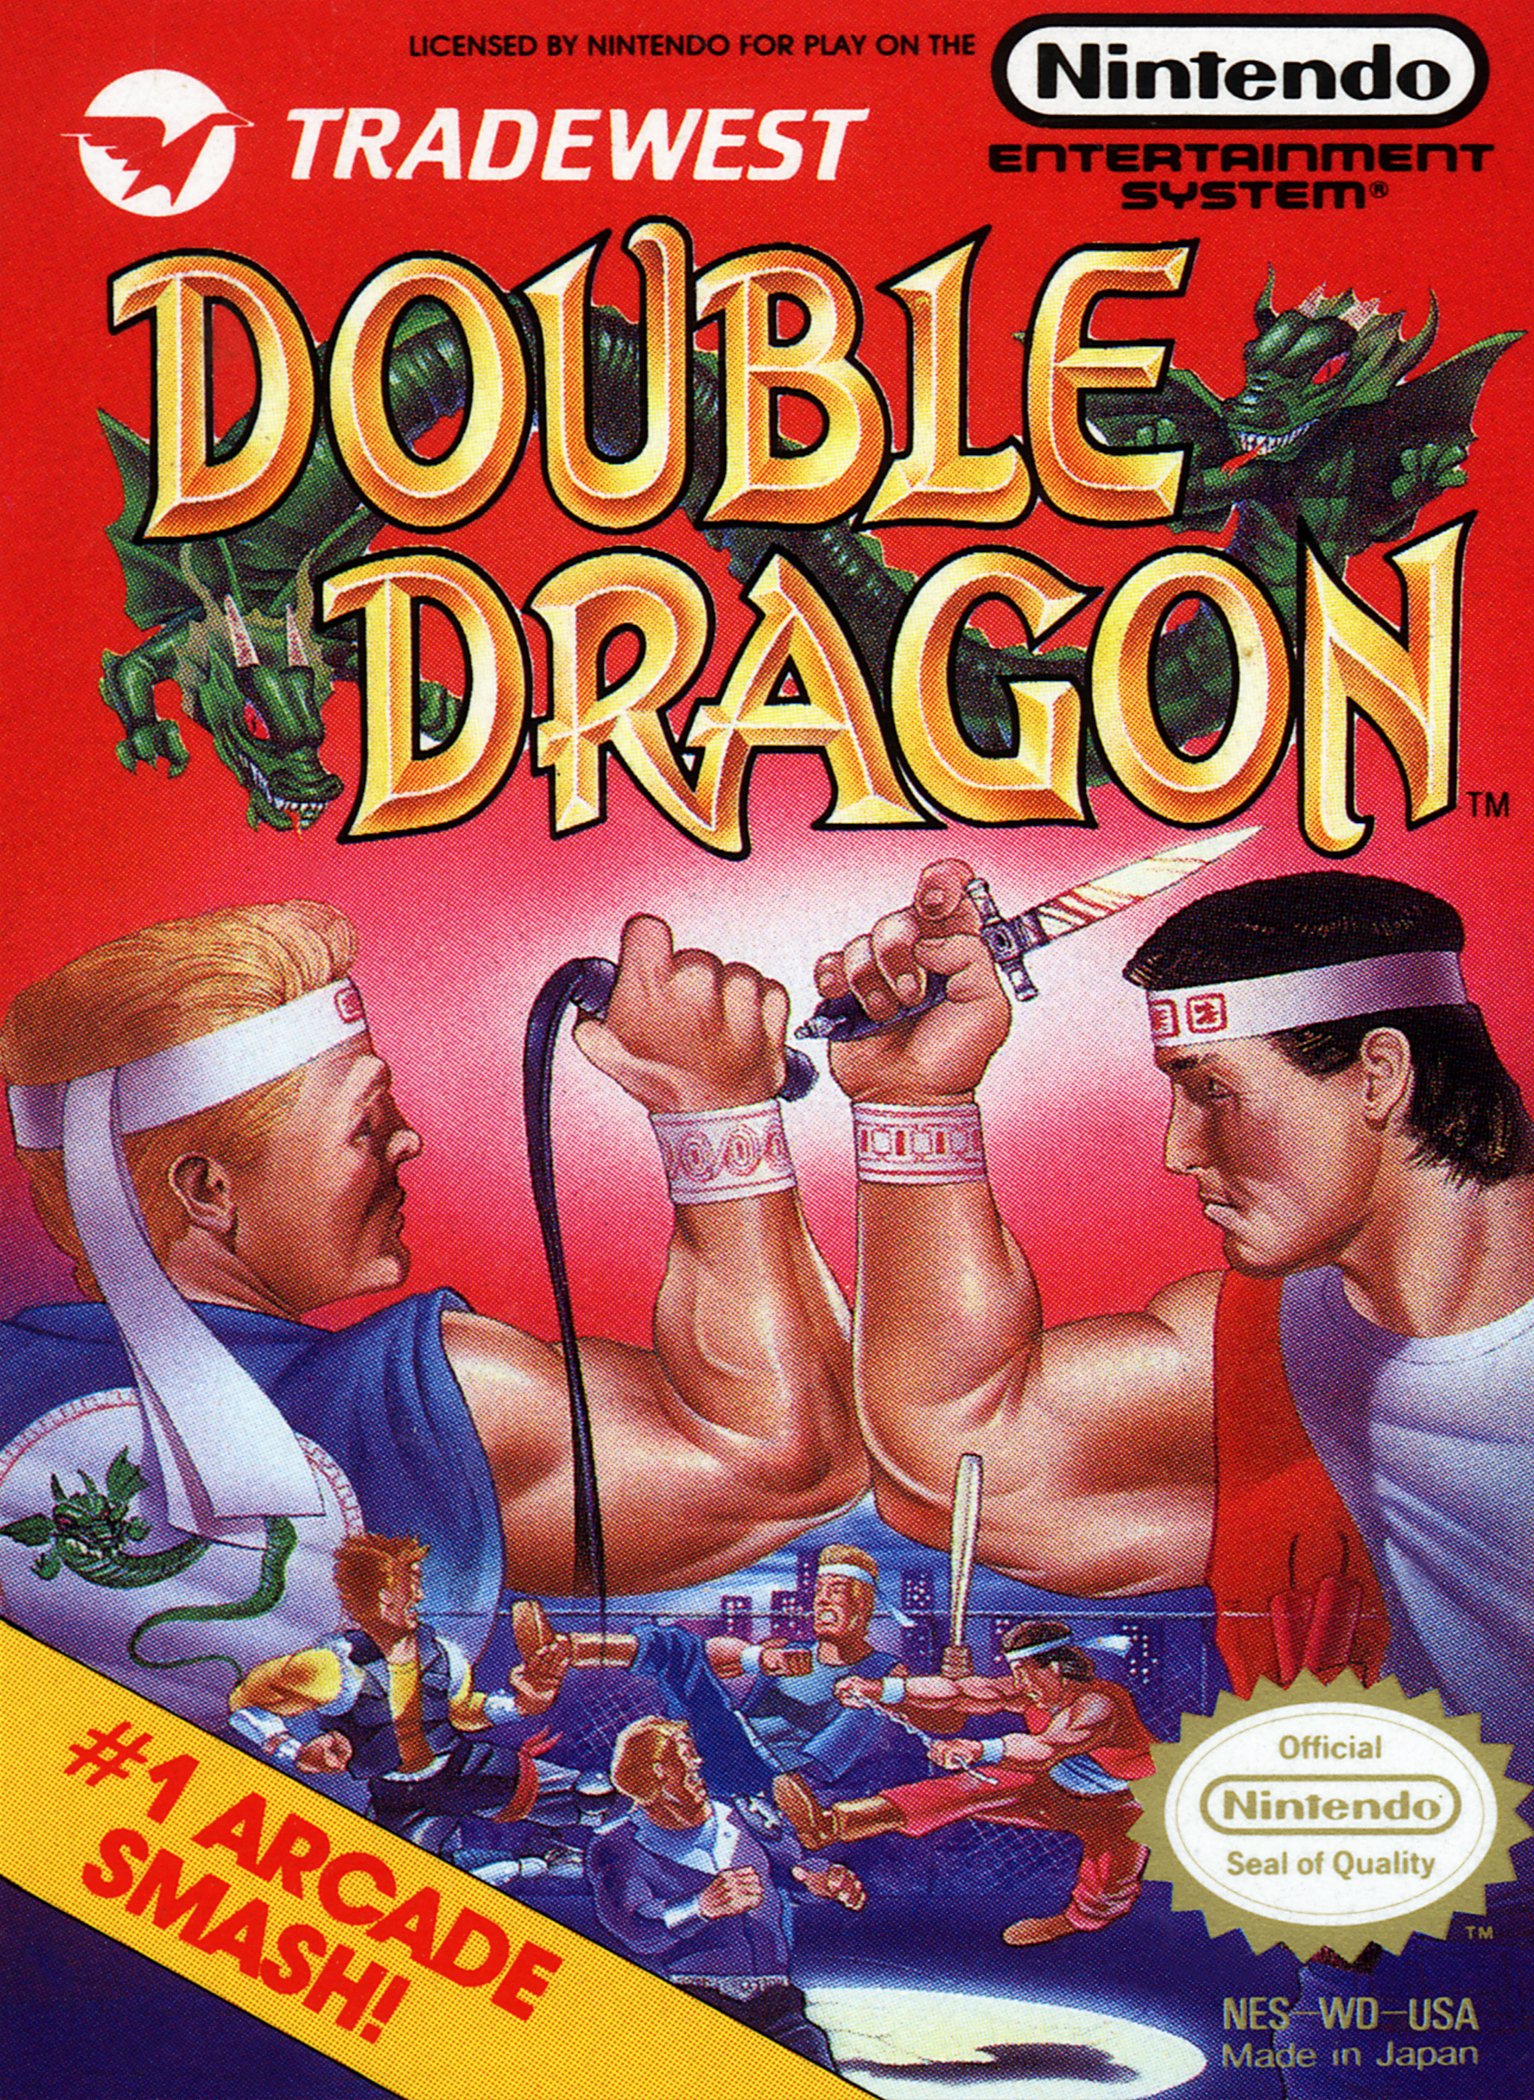 play double dragon arcade online